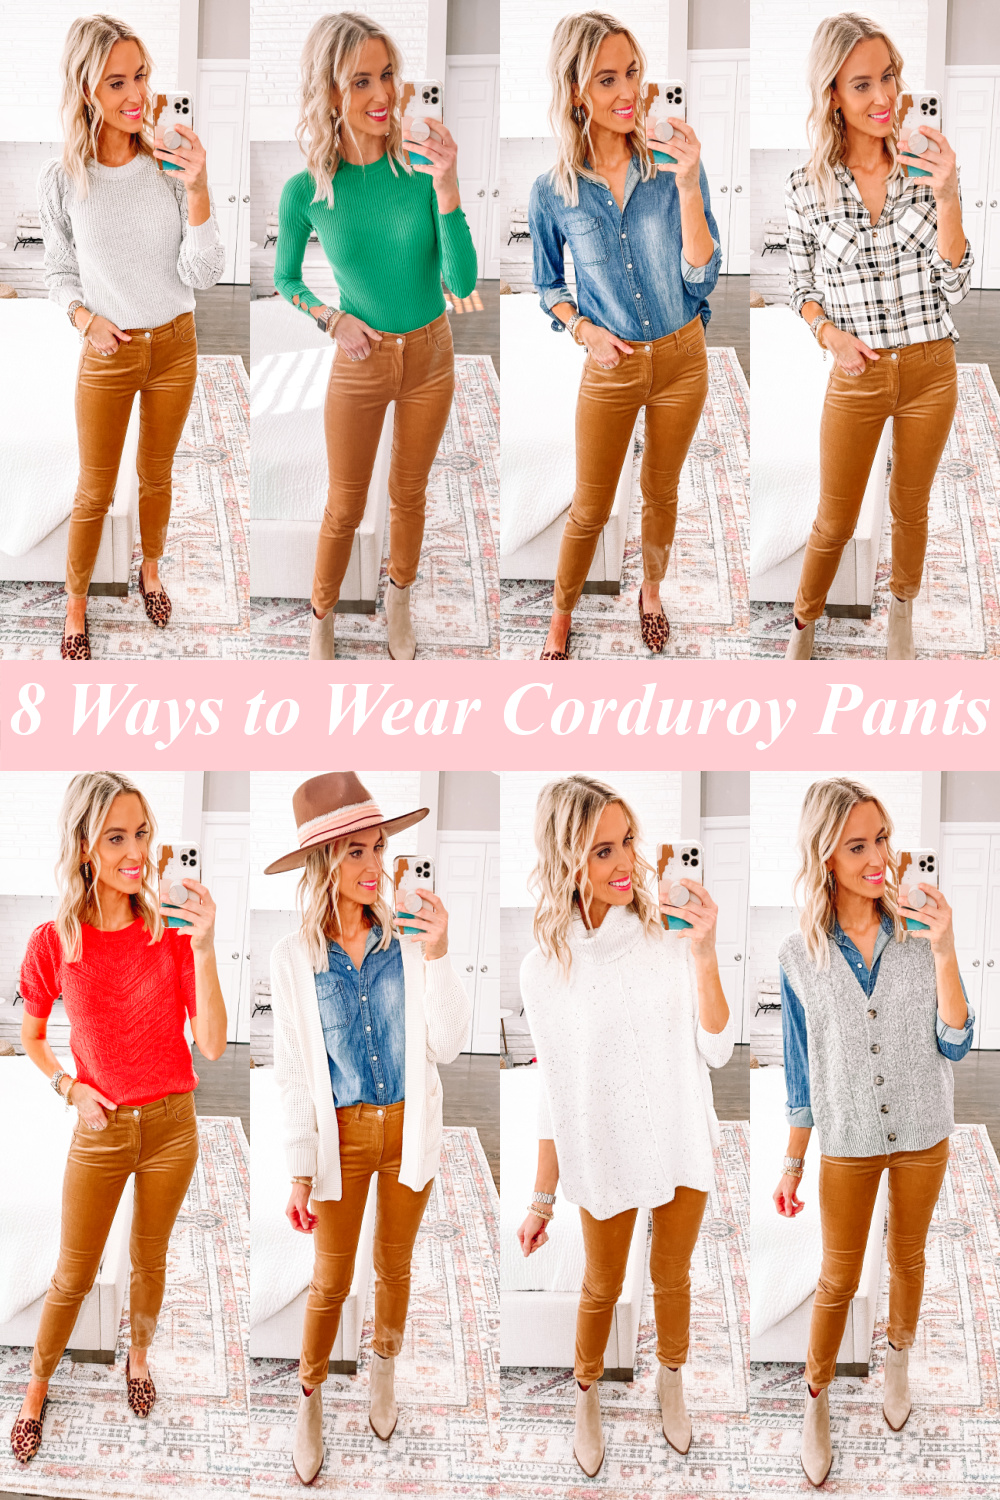 Corduroy Pants Beige Corduroy Pants Women's Pants Brown Trousers